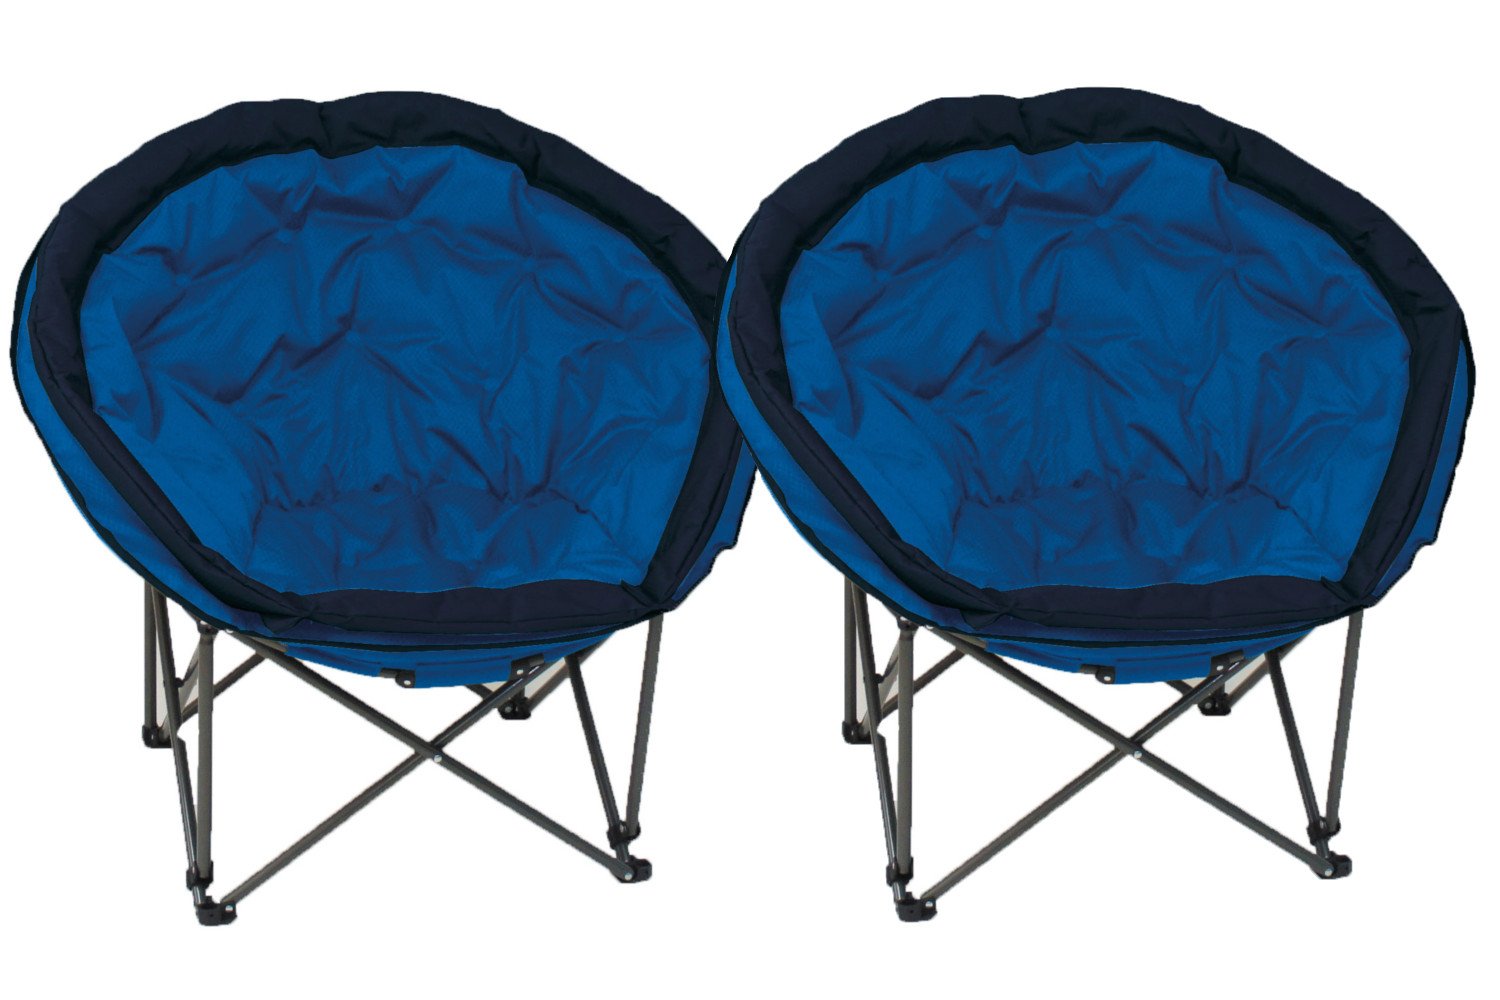 Quest Easy Range Lunar Moon Garden Chair in Blue - Pair – Capital Outdoors